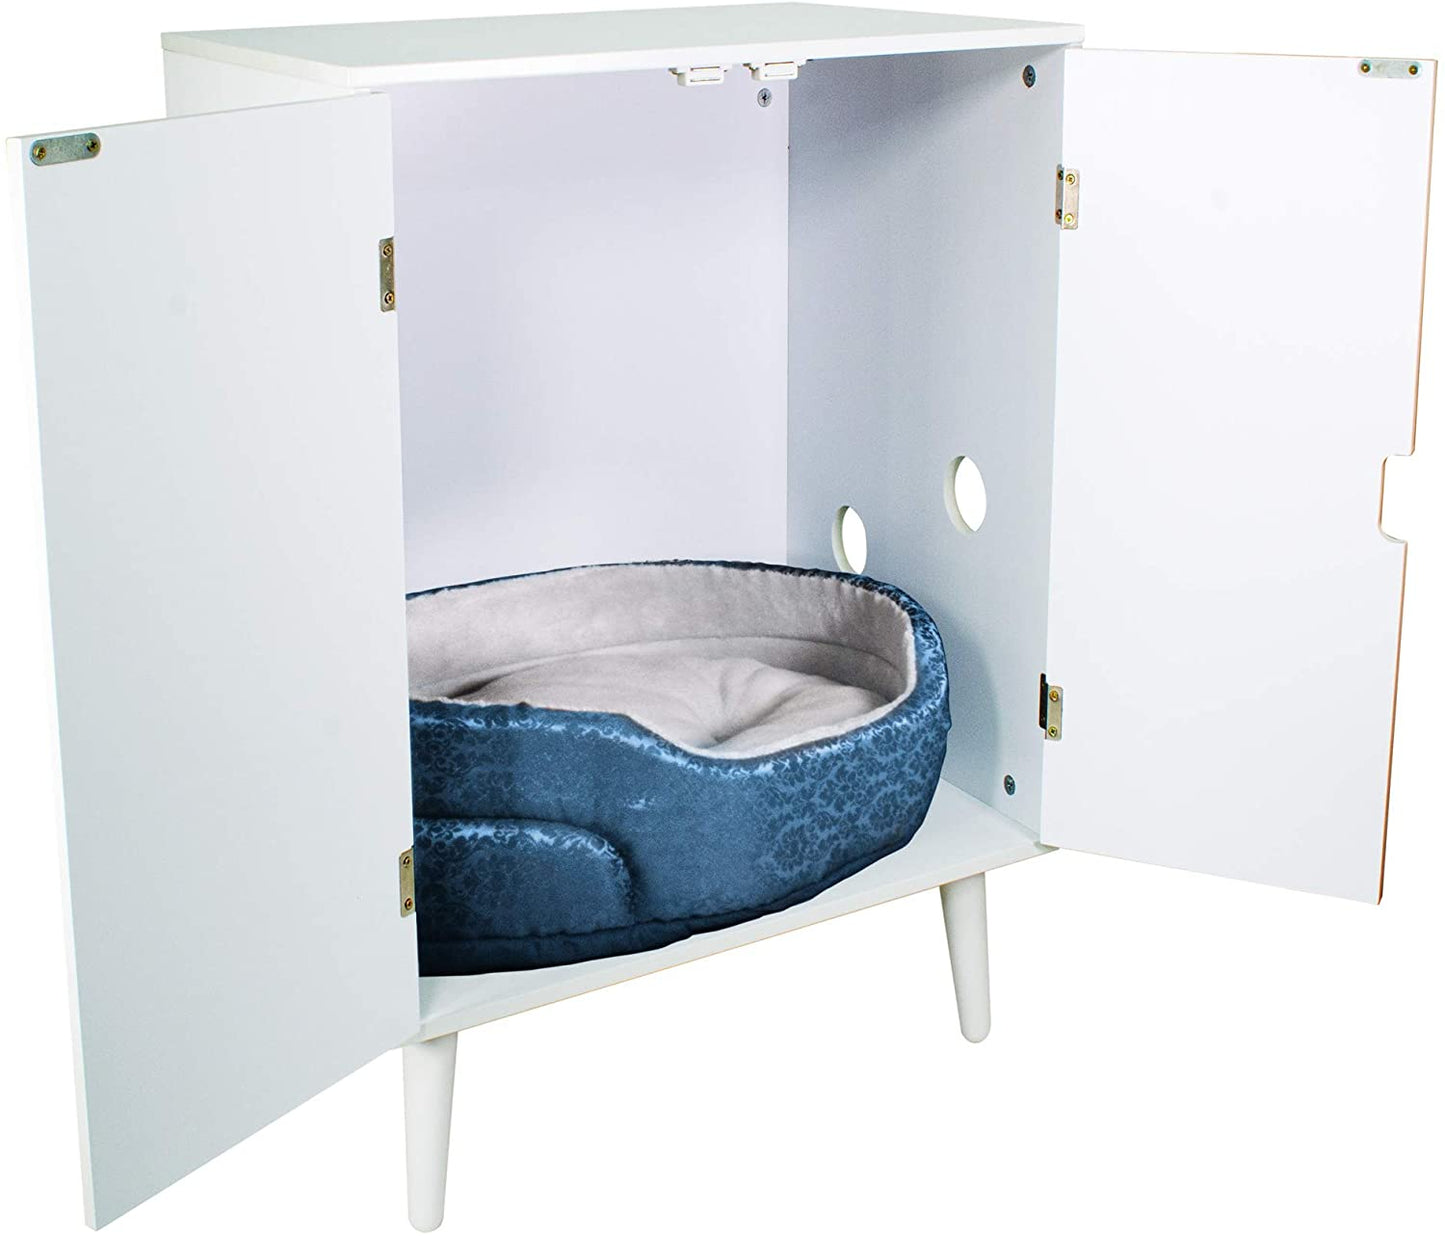 Penn-Plax Cat Walk Furniture: Contemporary Home Cat Litter Hide-Away Cabinet – All White